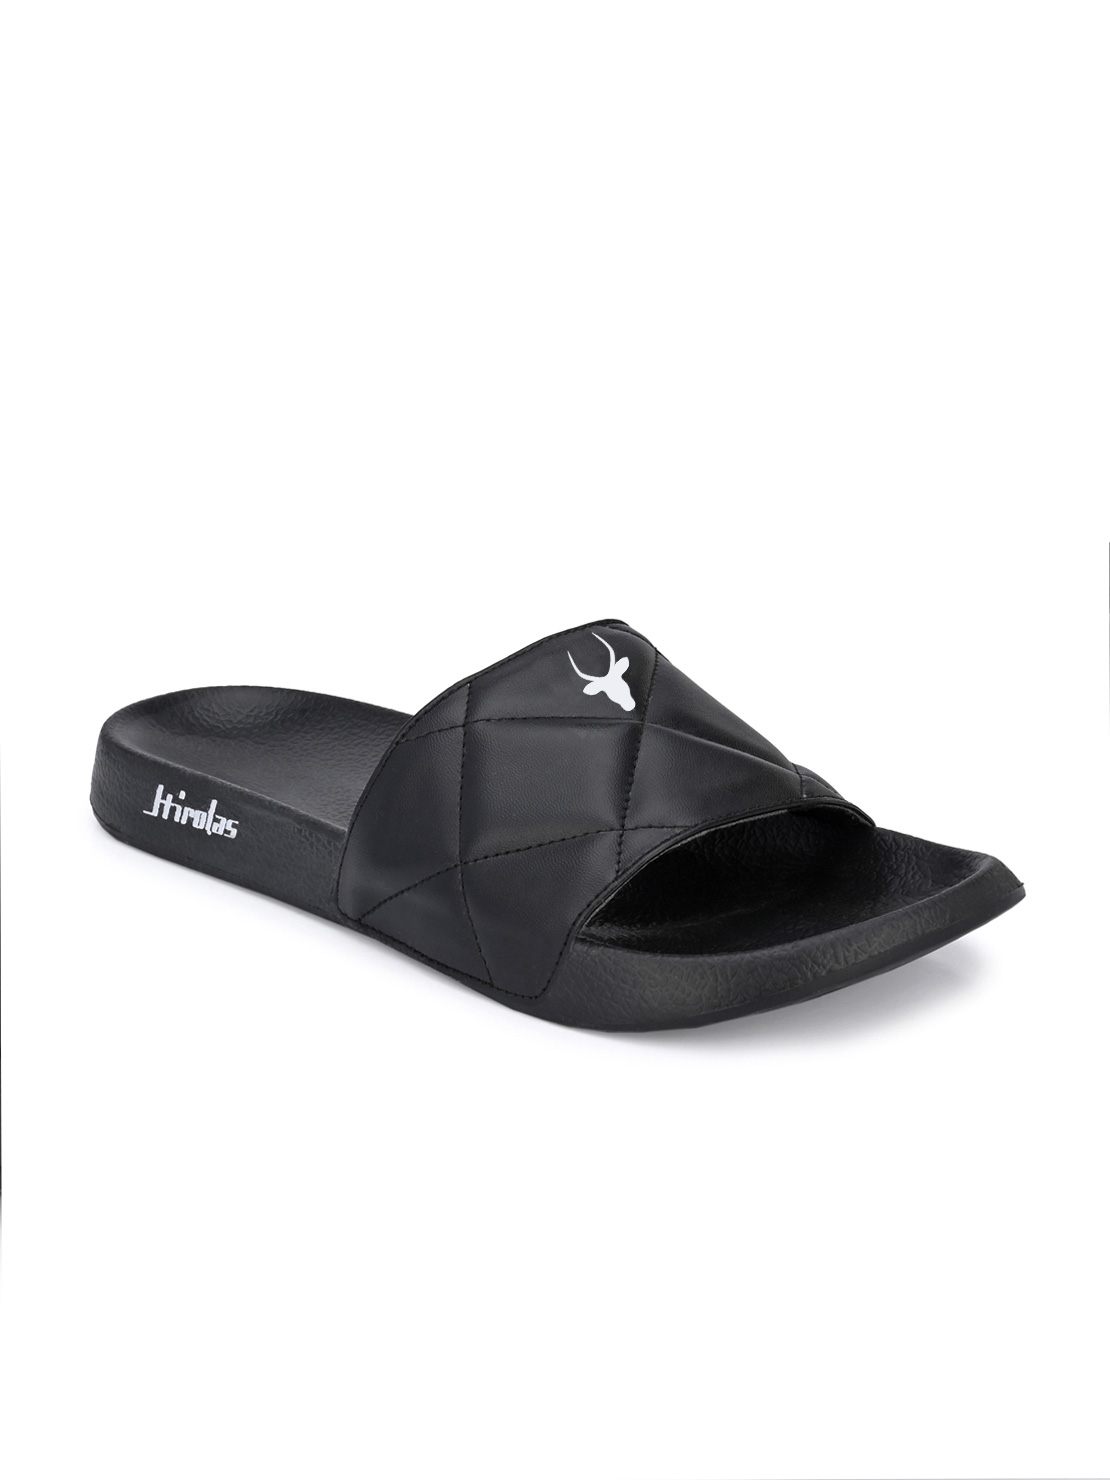 Hirolas | Hirolas® Men Quilted Slipper Sliders - Black